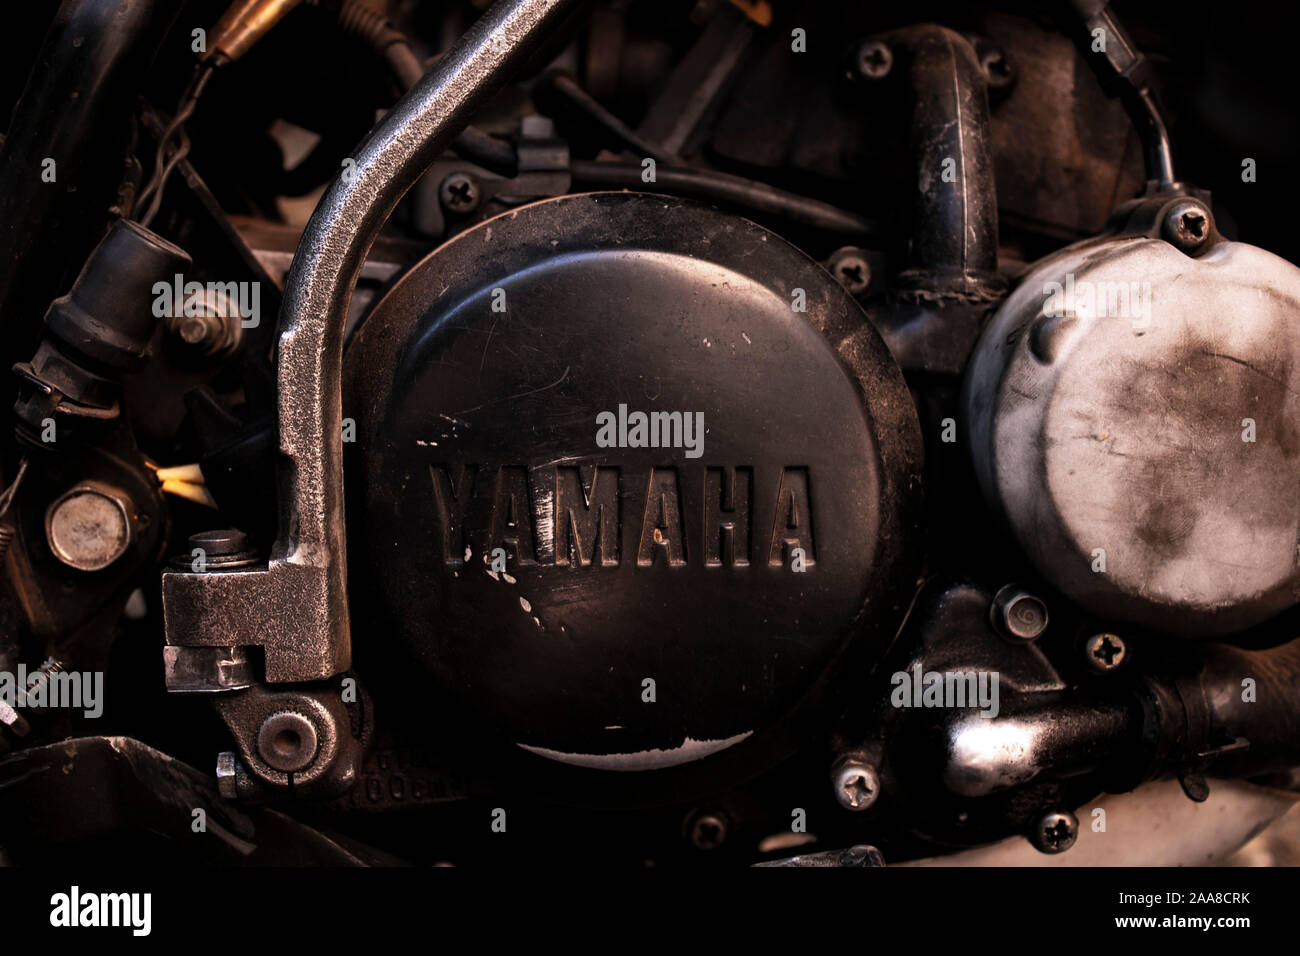 1990 Yamaha dt motorcycle vintage Stock Photo